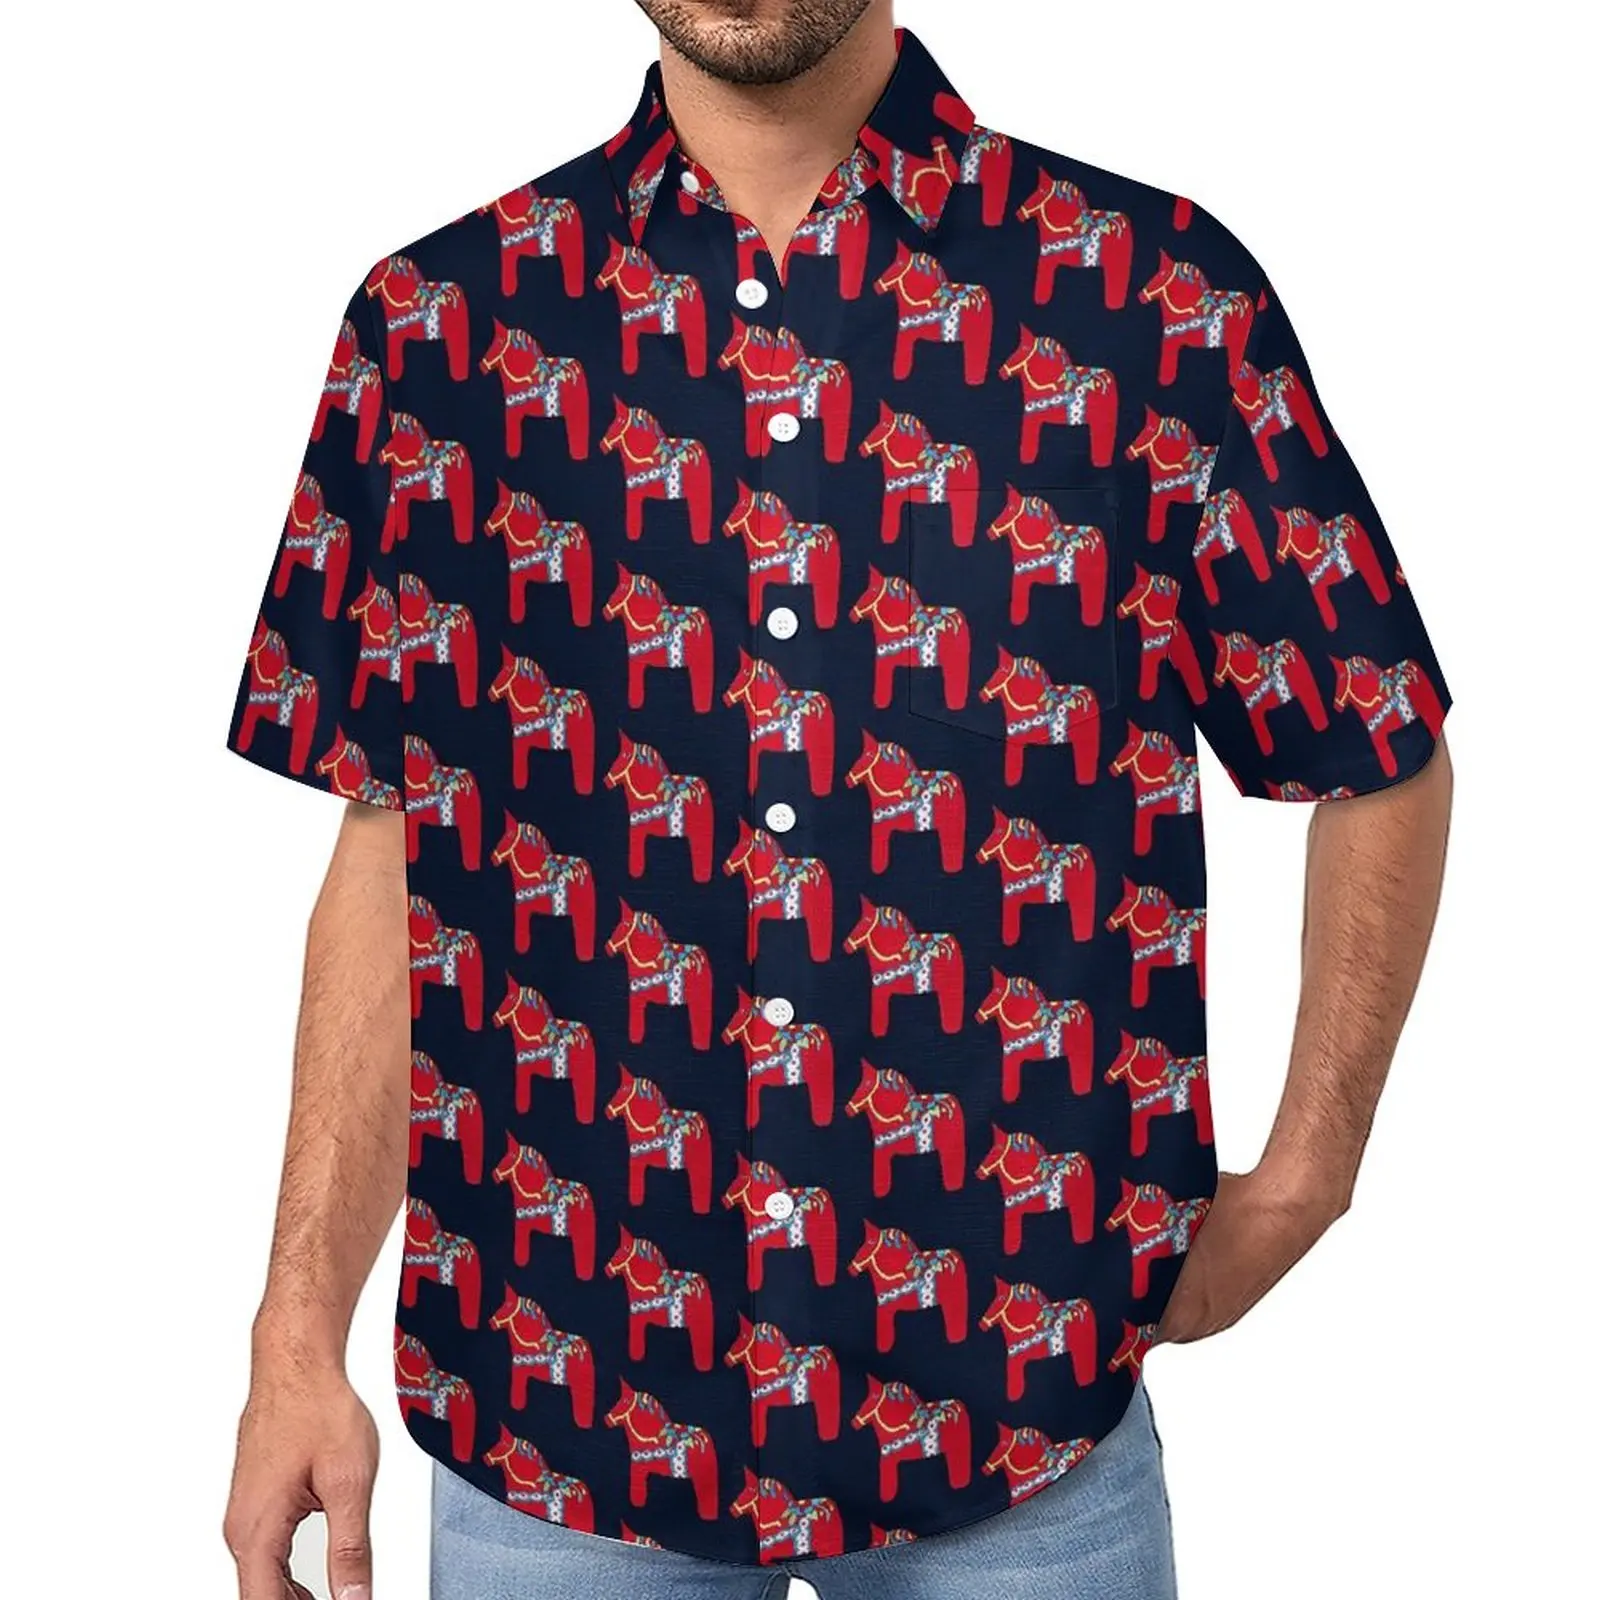 

Dala Horse Vacation Shirt Cute Animal Print Summer Casual Shirts Men Funny Blouses Short Sleeve Graphic Clothes Big Size